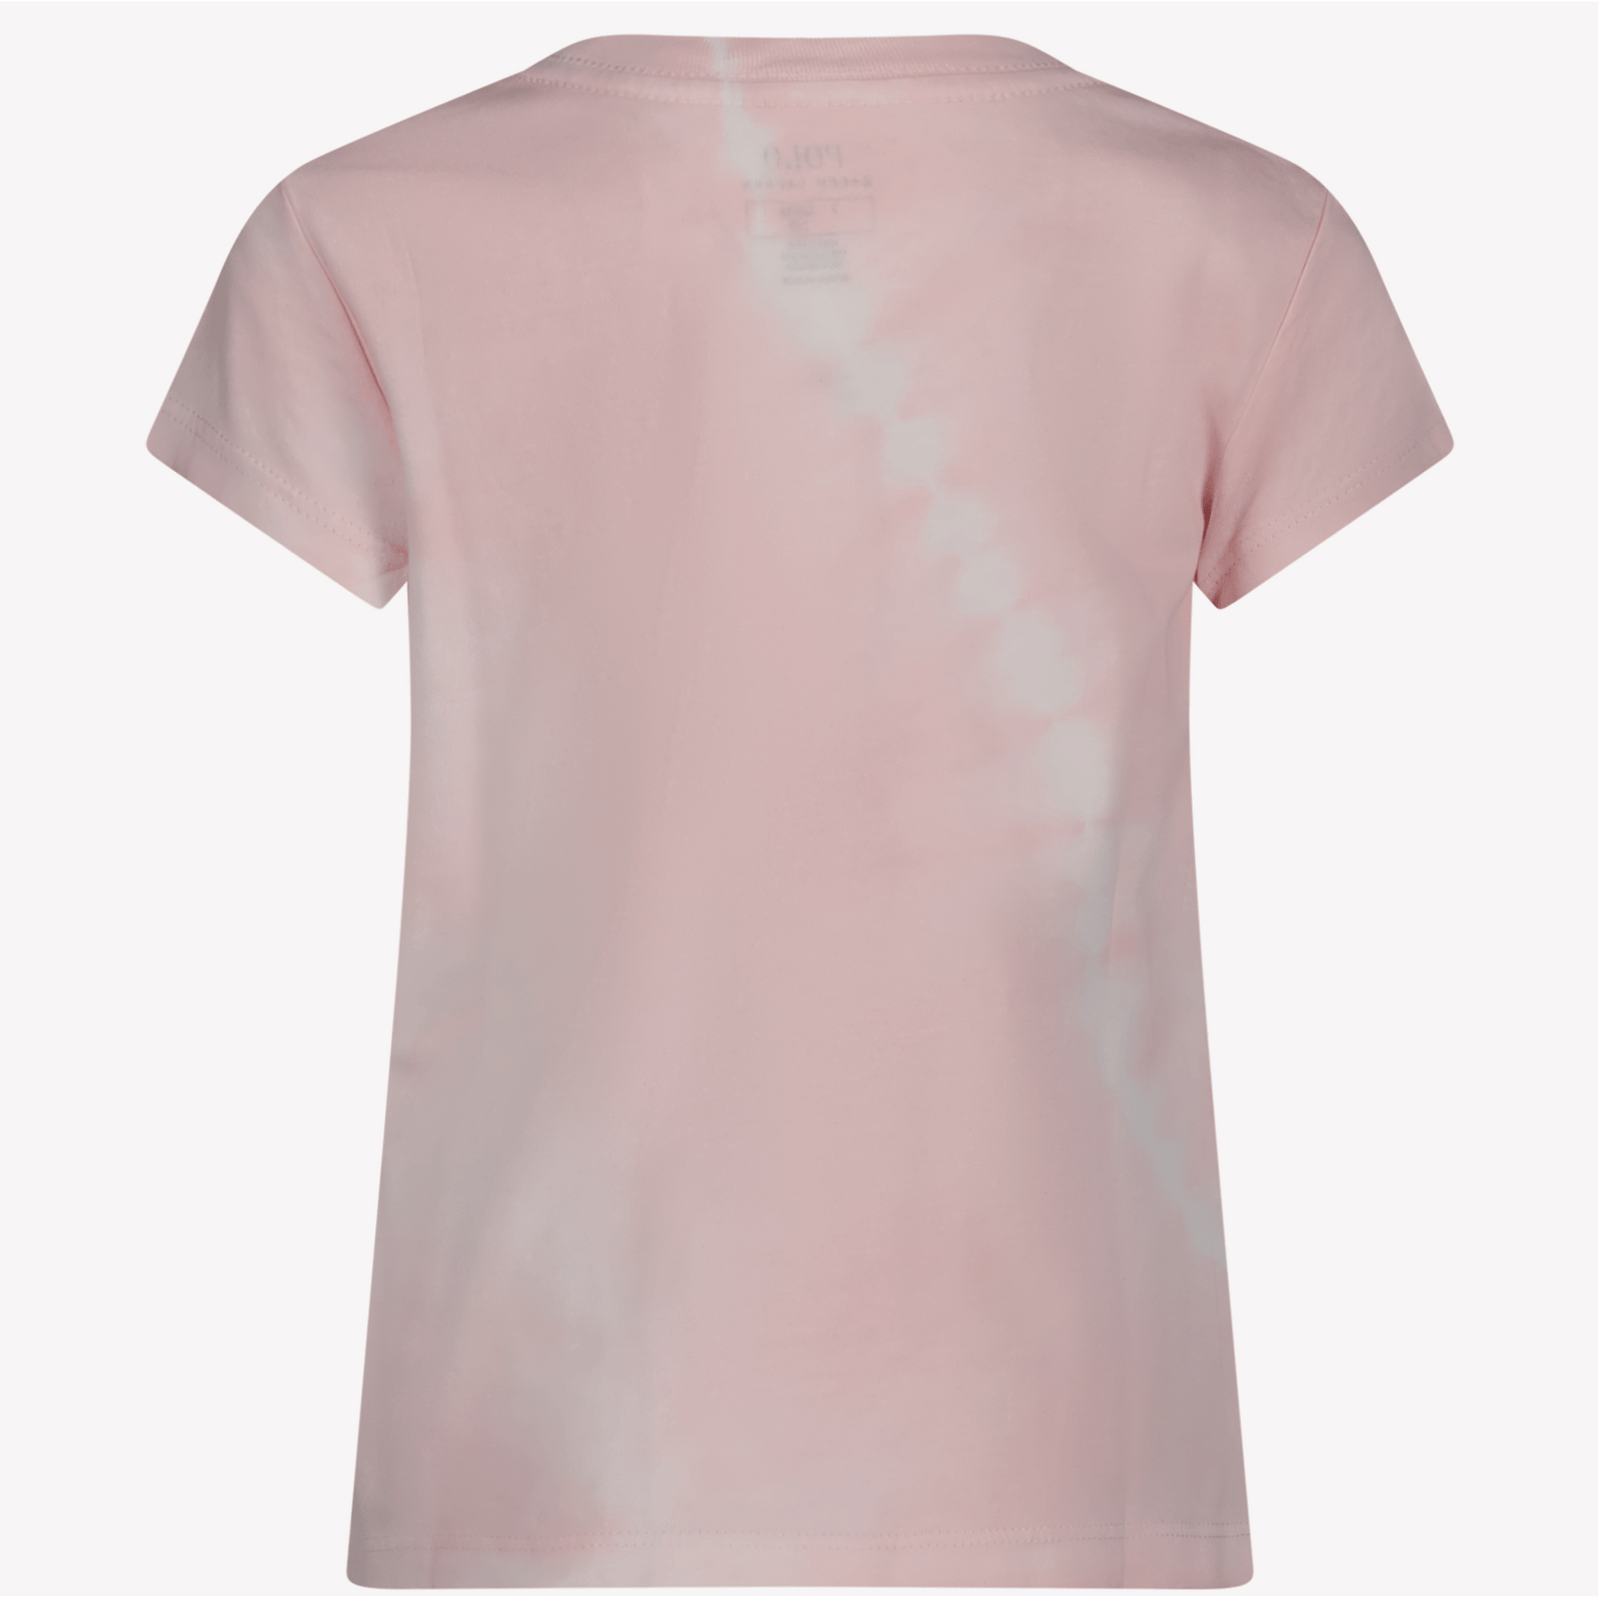 Ralph Lauren Kinder Meisjes T-Shirt Roze 2Y